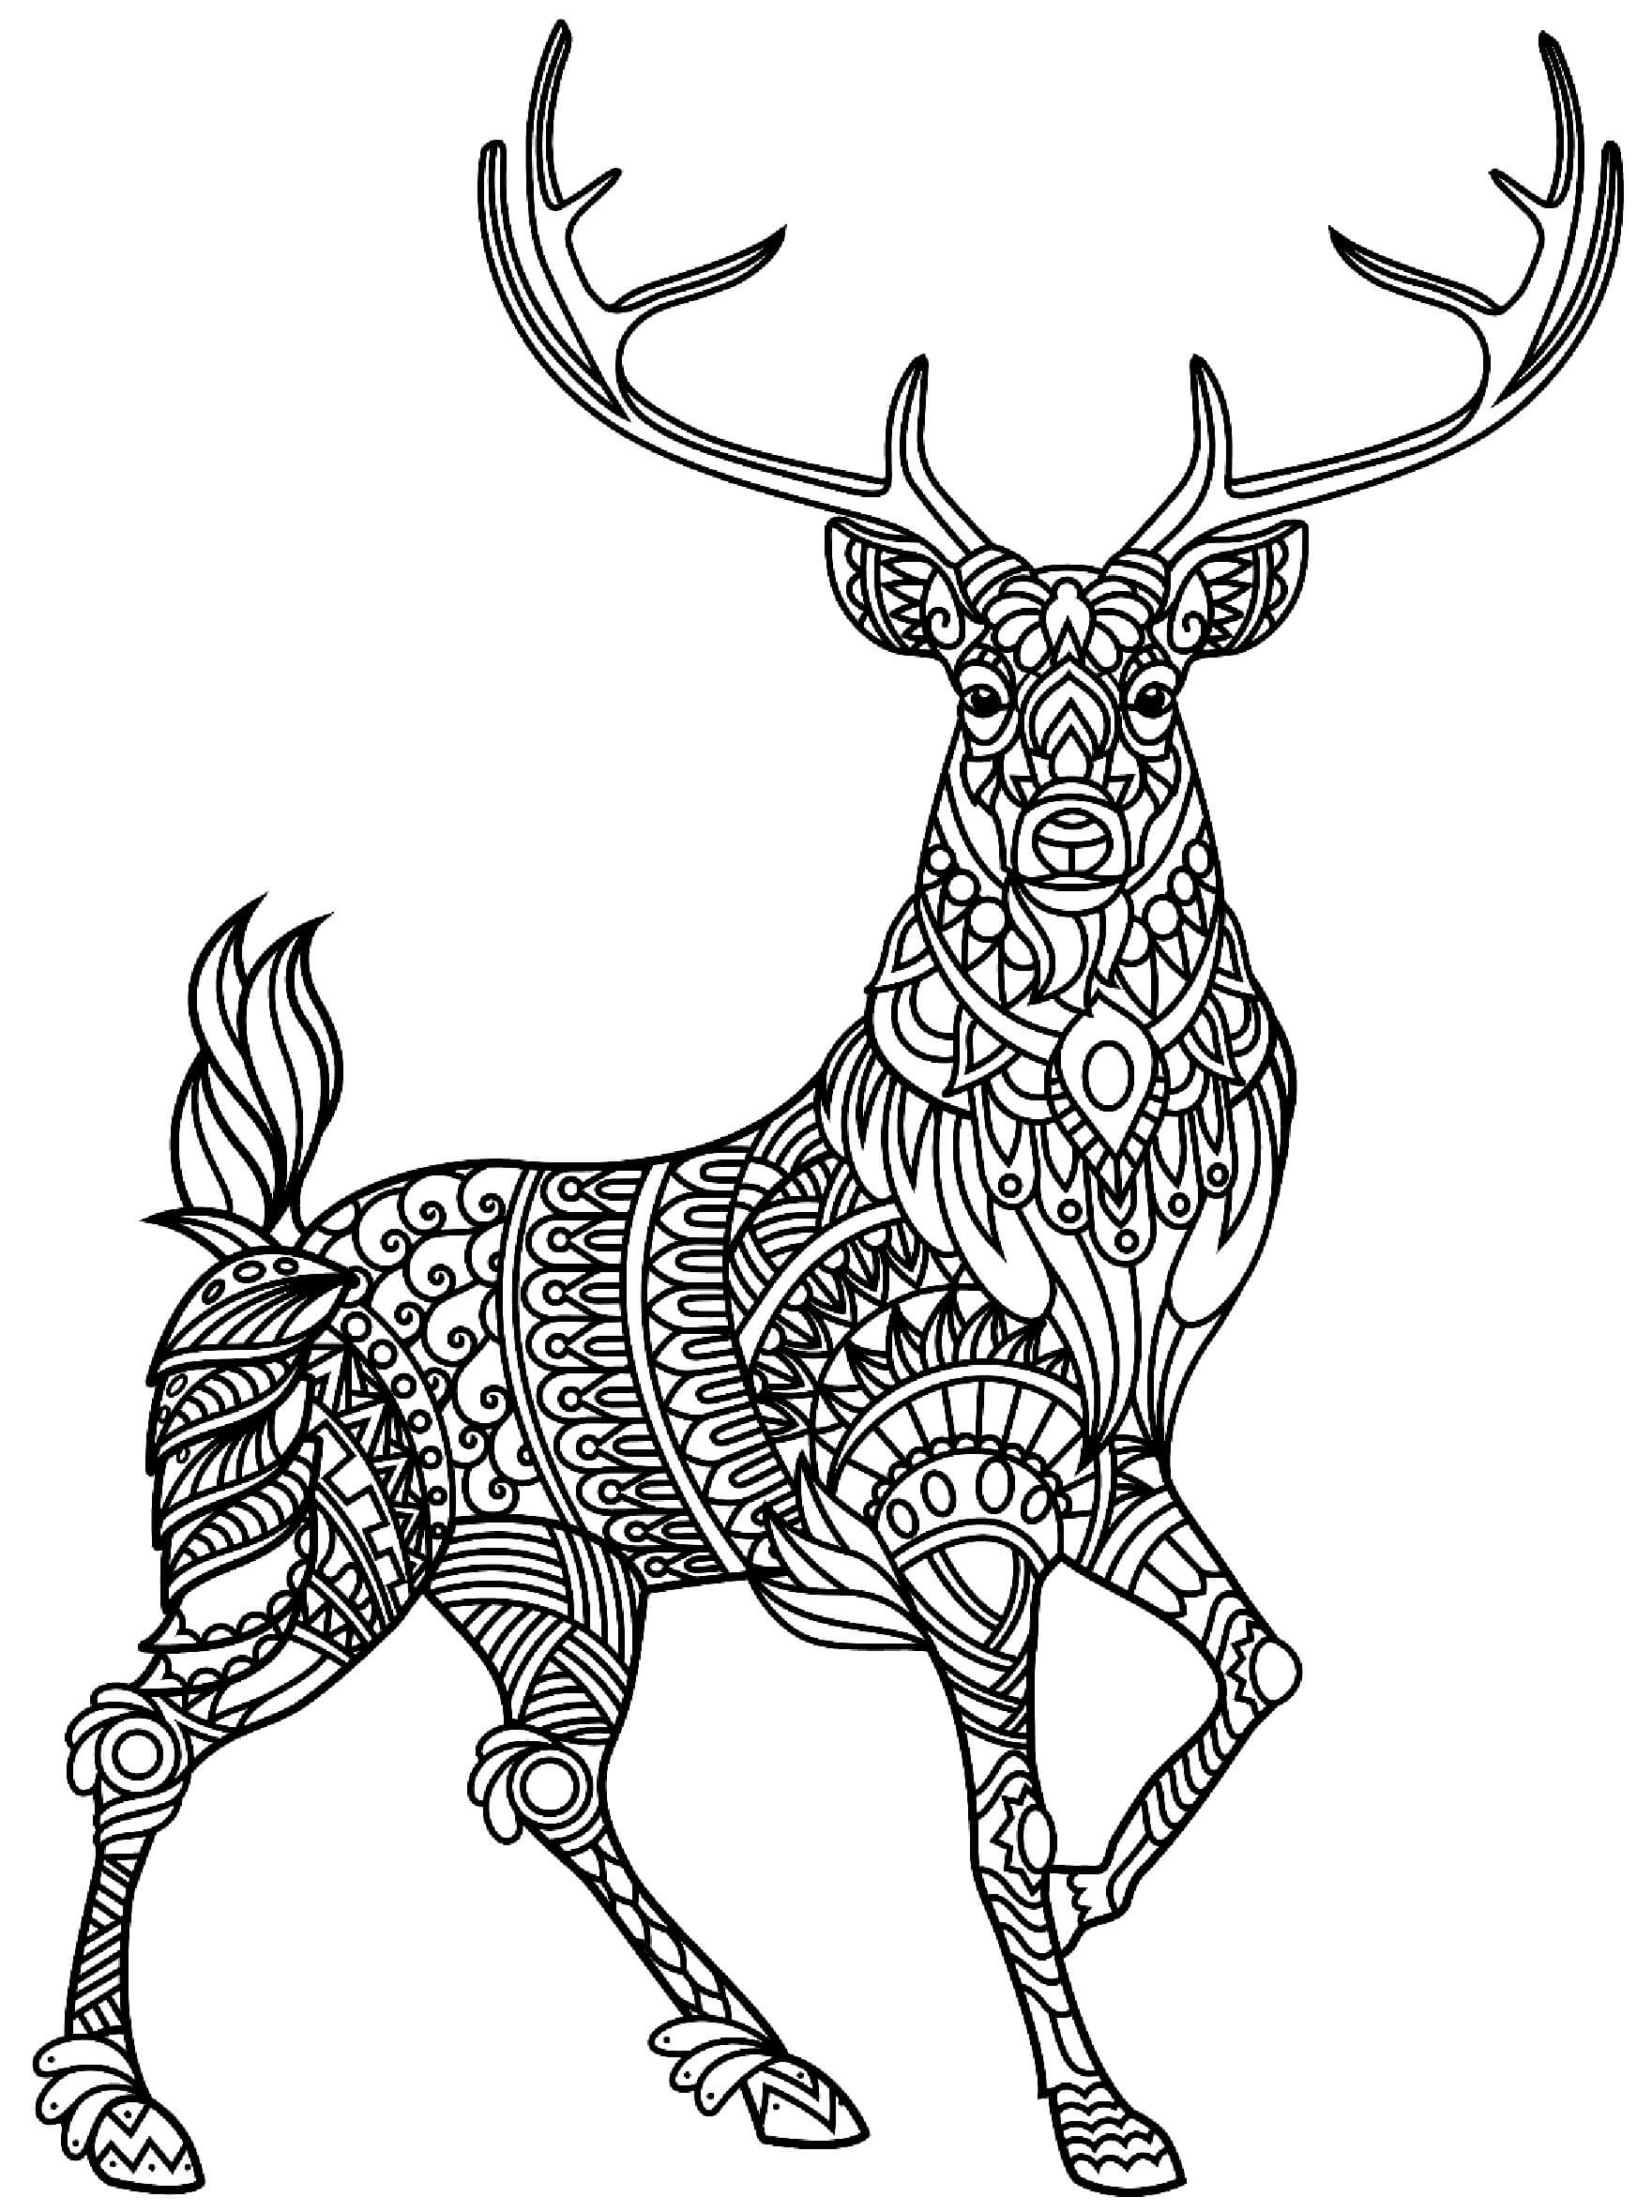 Mandala Deer Coloring Page – Sheet 6 Mandala